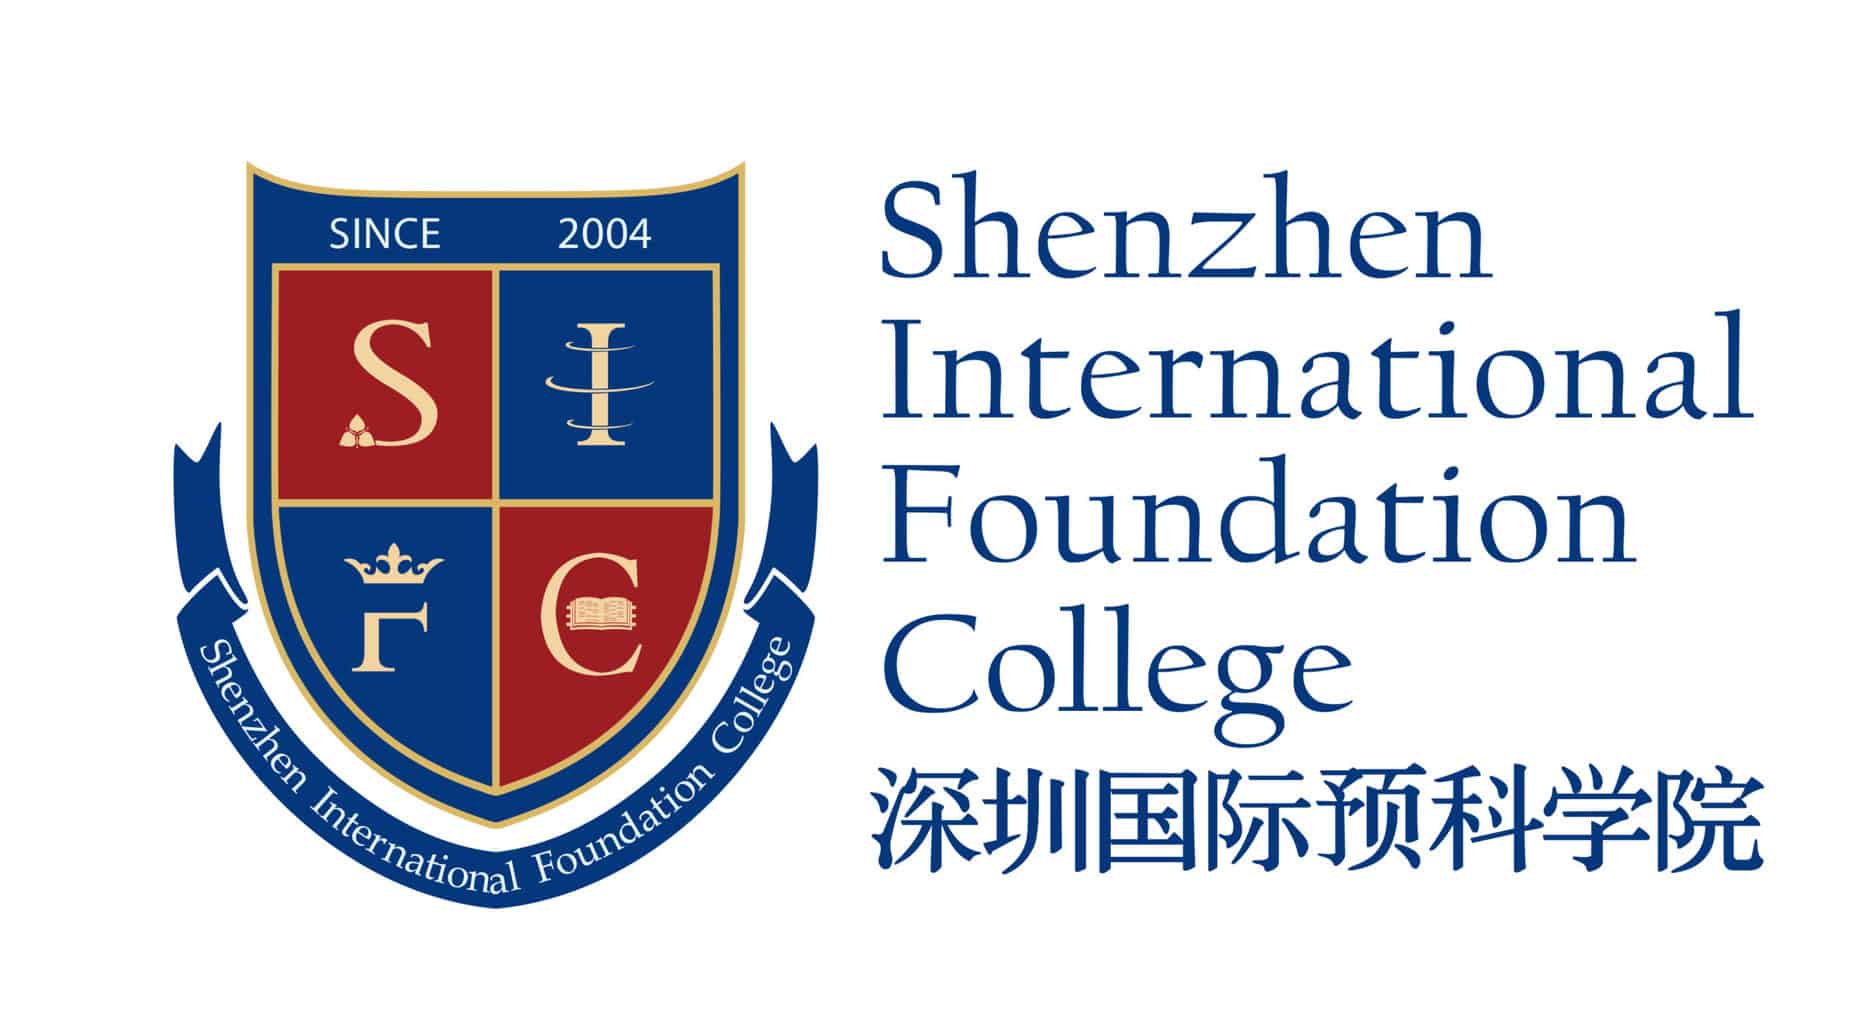 Featured image for “Shenzhen International Foundation College”